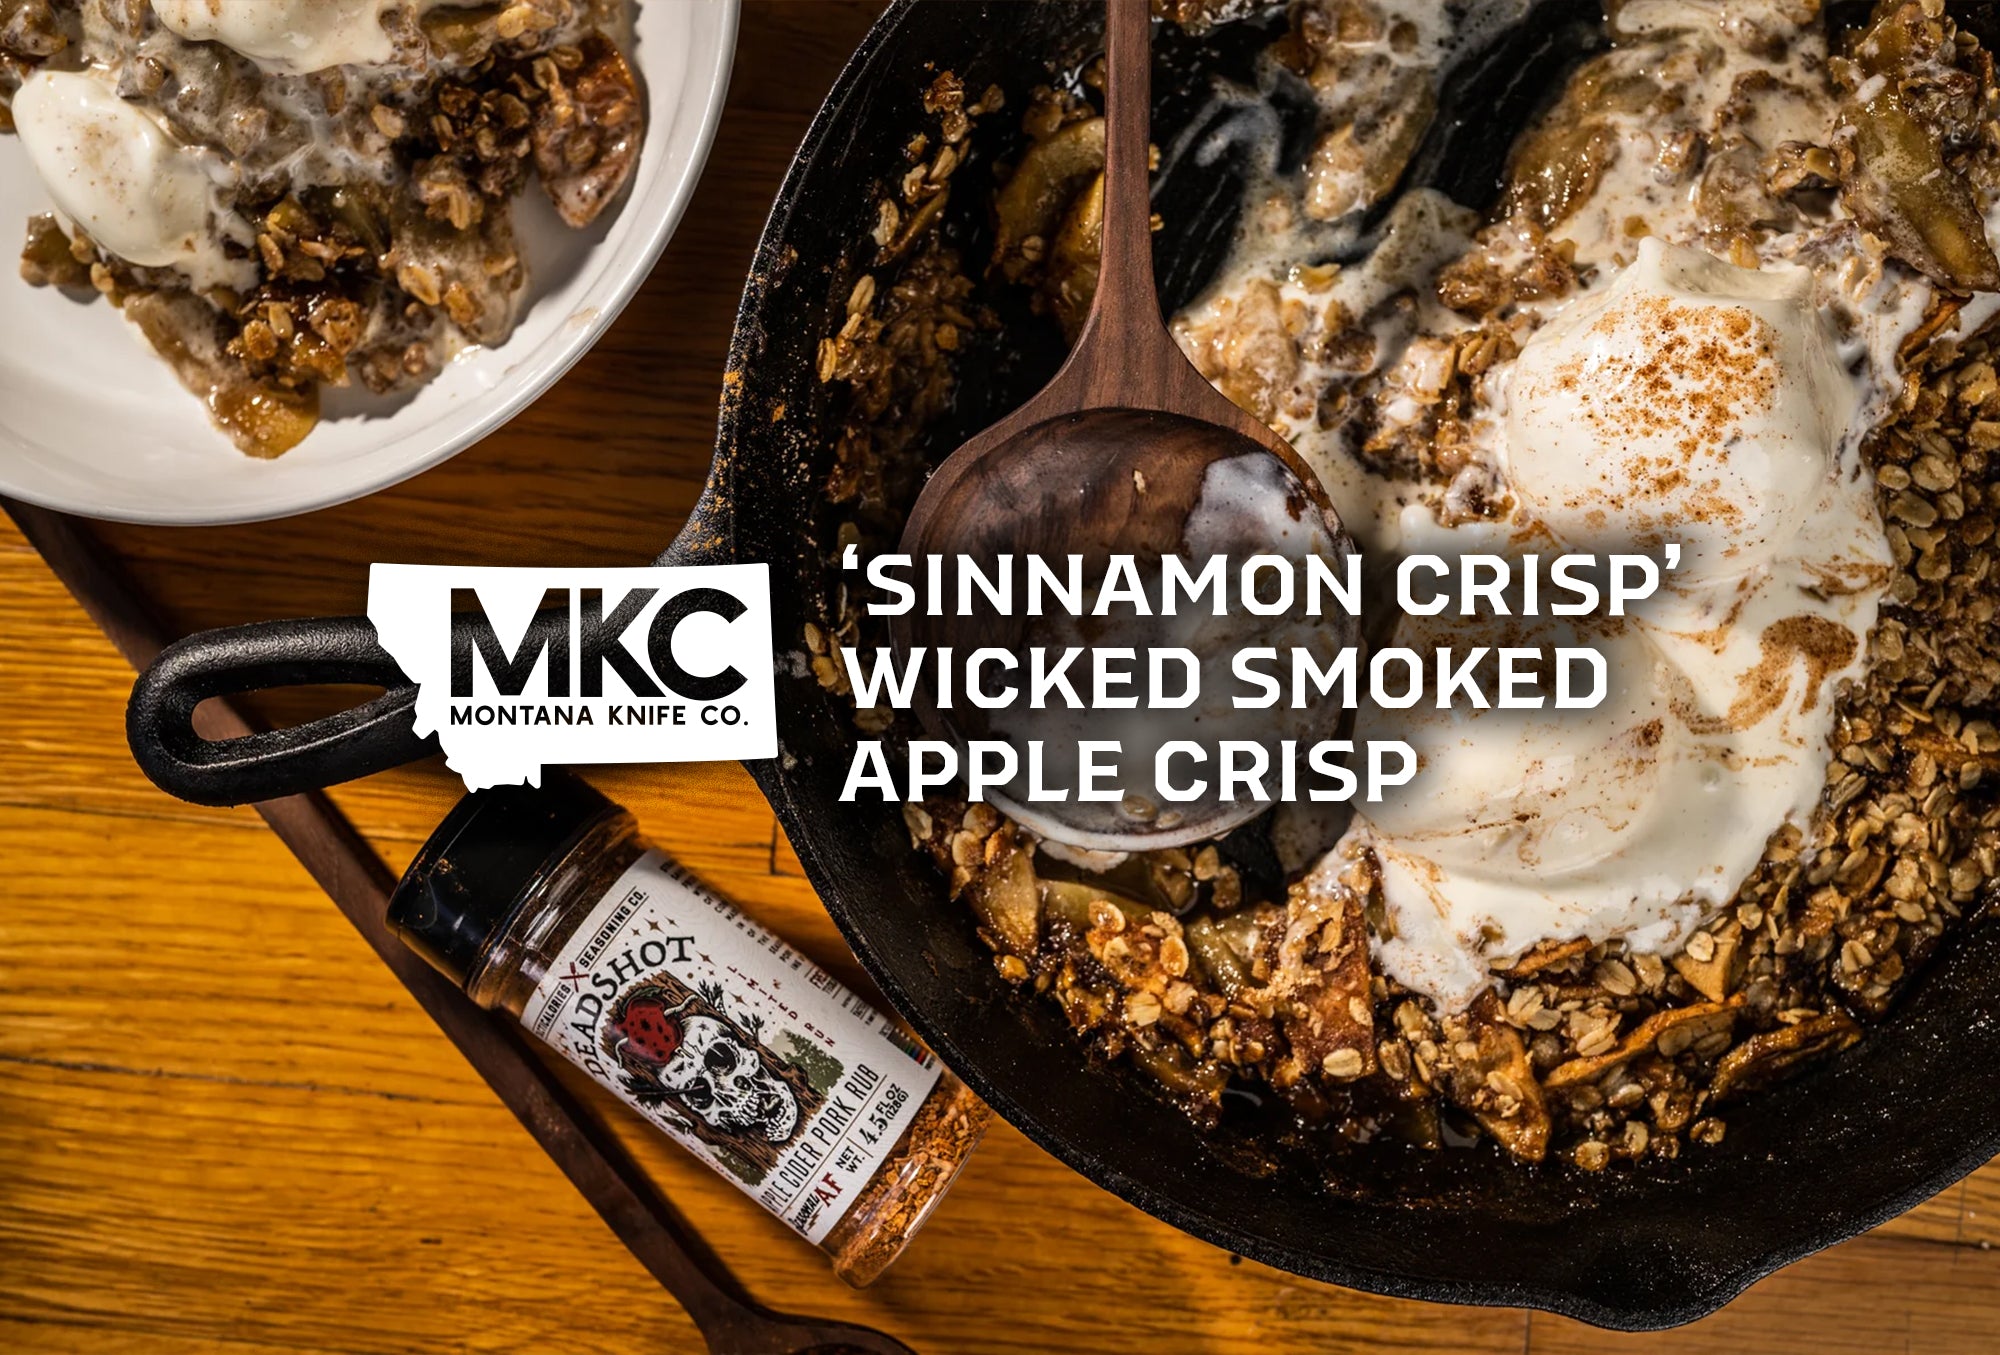 Picture of the ‘Sinnamon Crisp’ Wicked Smoked Apple Crisp with ice cream.